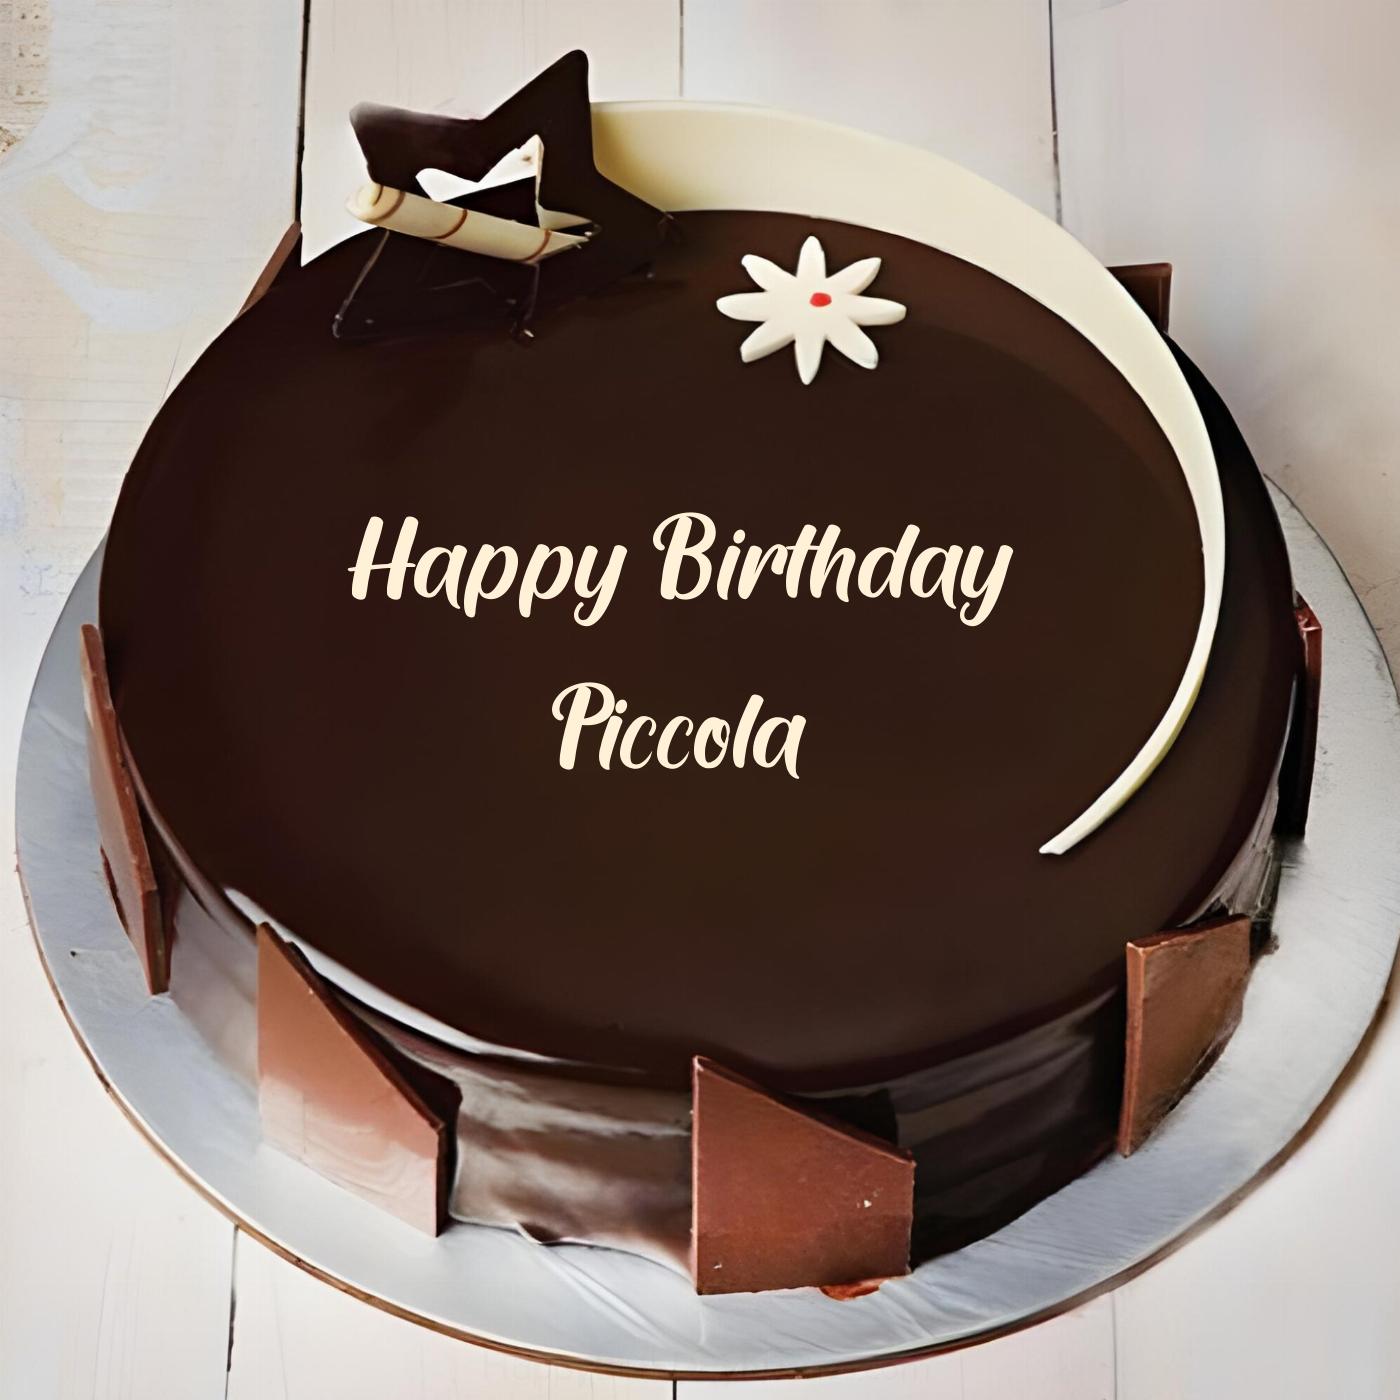 Happy Birthday Piccola Chocolate Star Cake